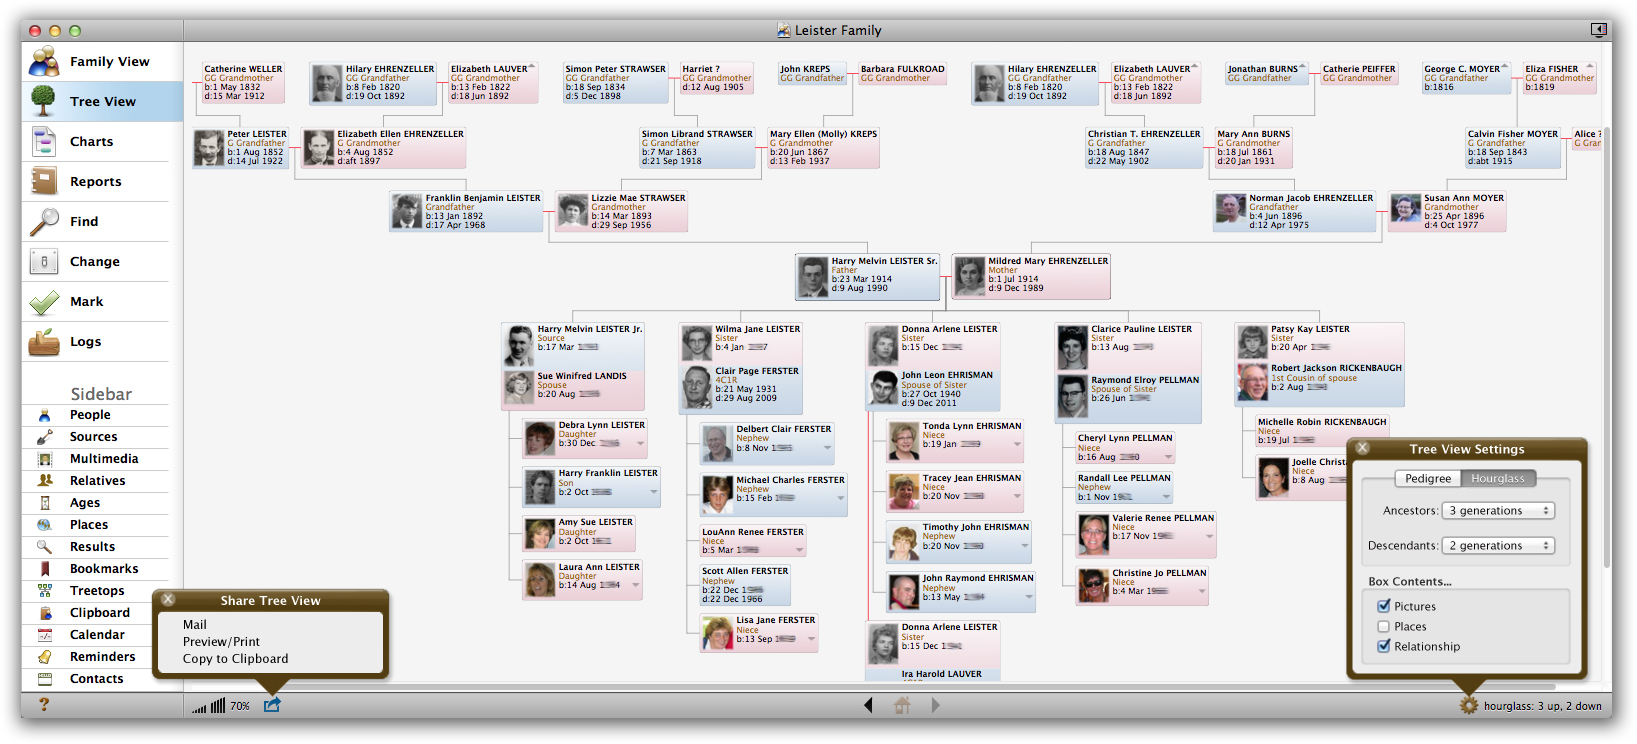 Genealogy Software For Mac Download